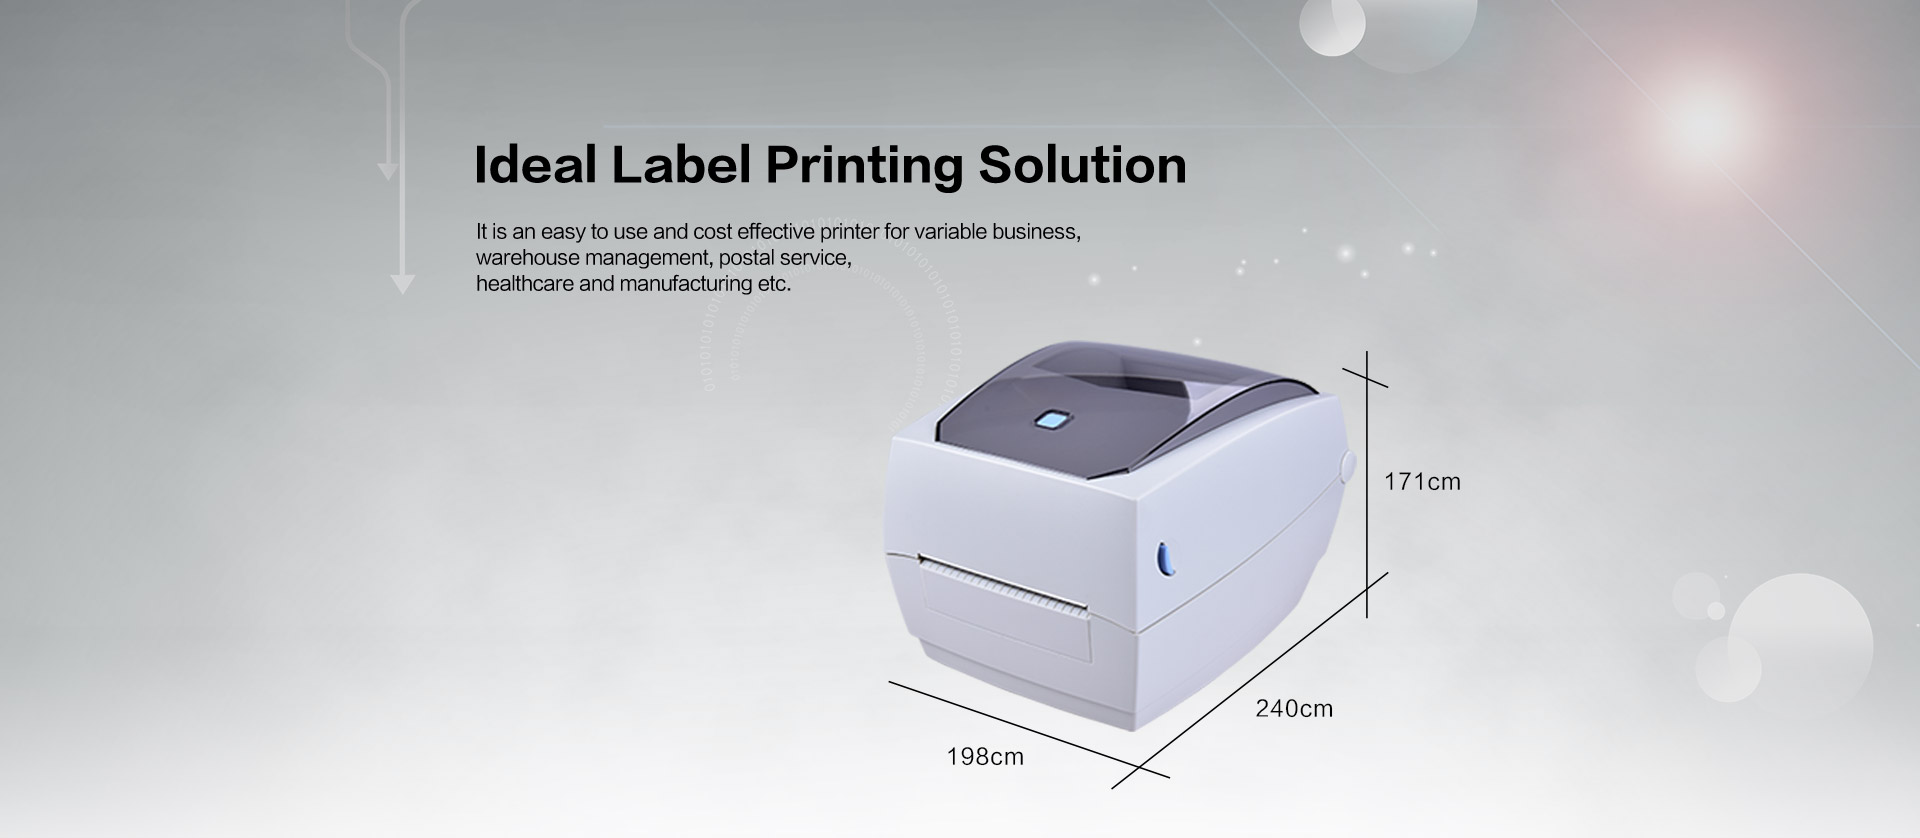 HPRT label printing solution